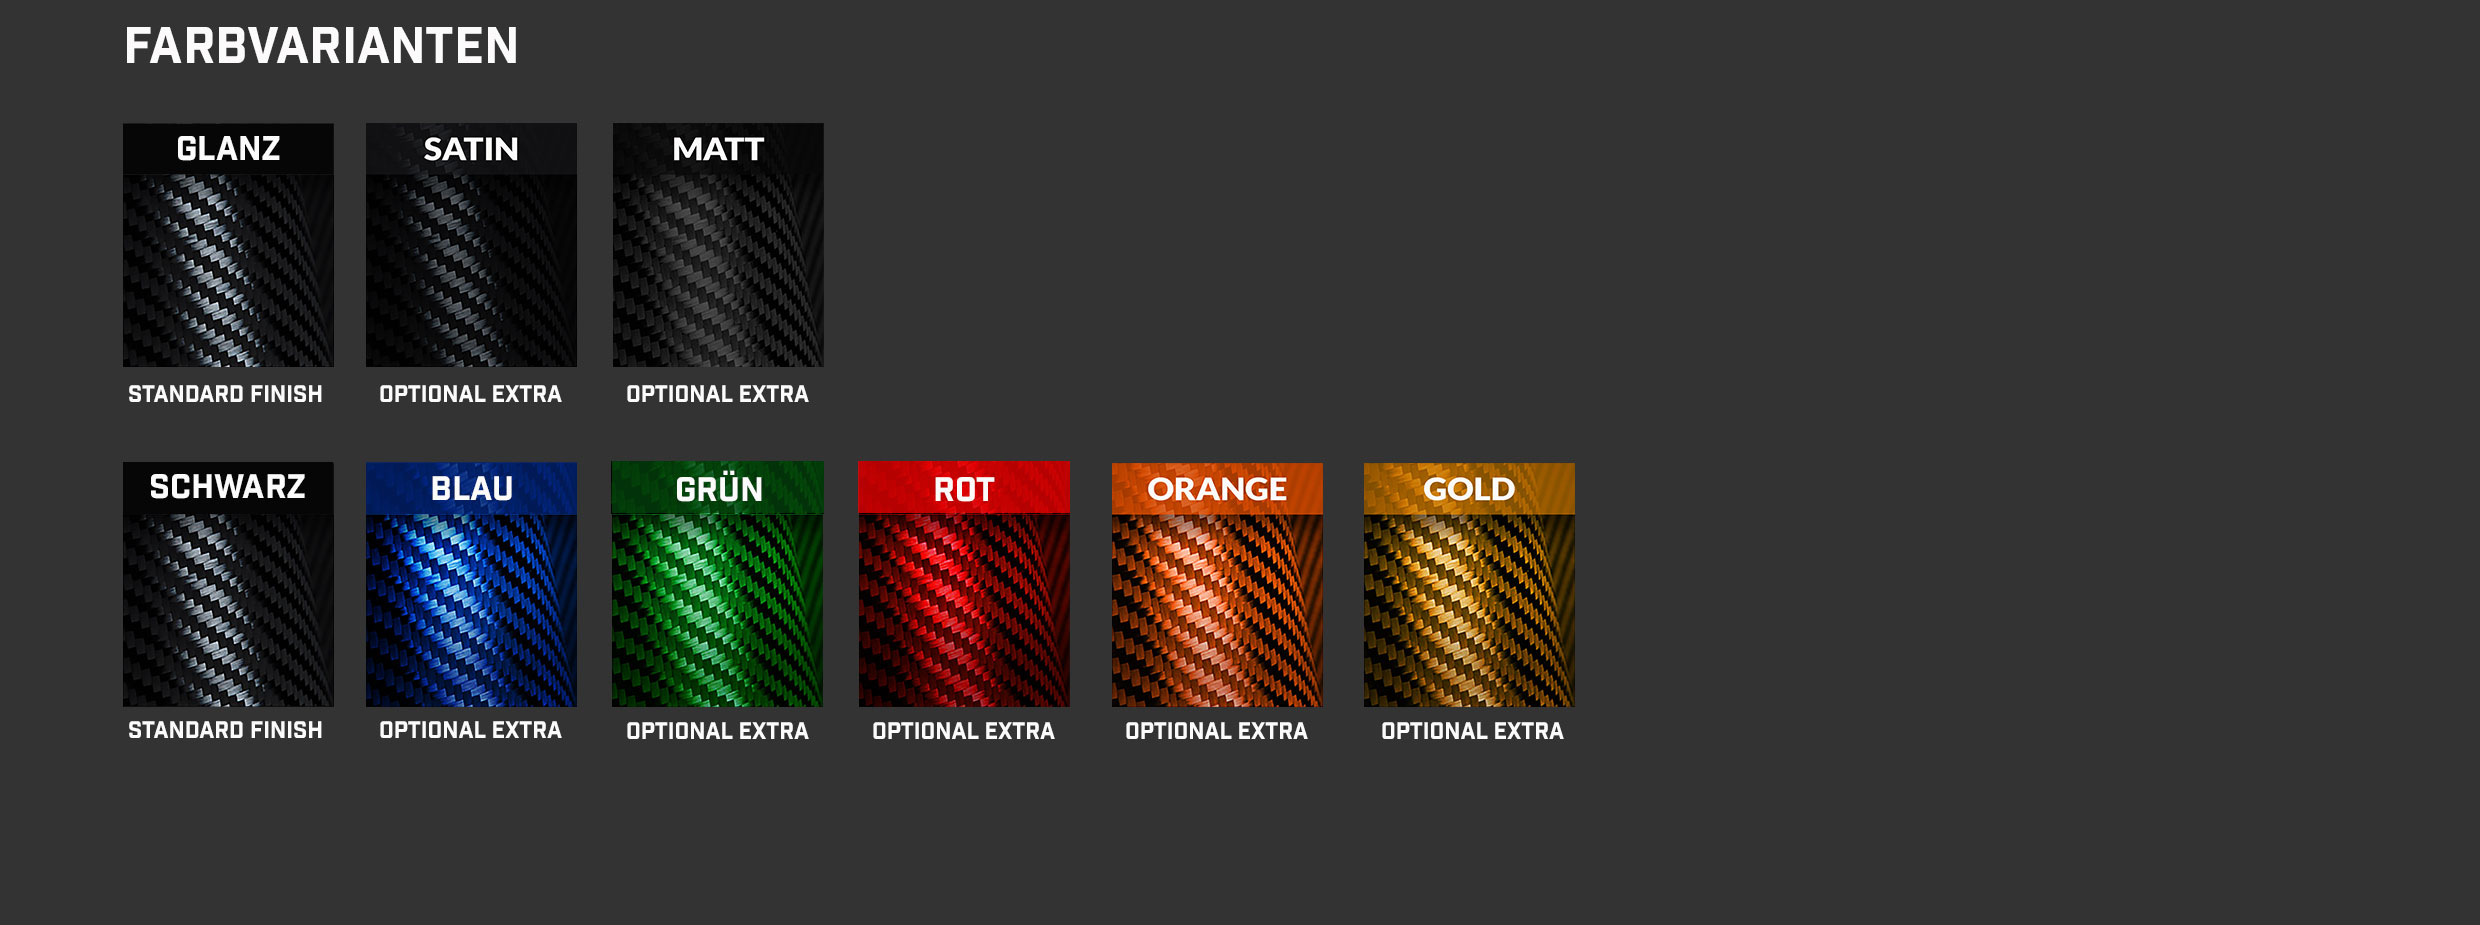 Farbvarianten Carbonfelgen - Glanz- Satin - Matt - Schwarz - Blau - Gruen - Rot - Orange - Gold